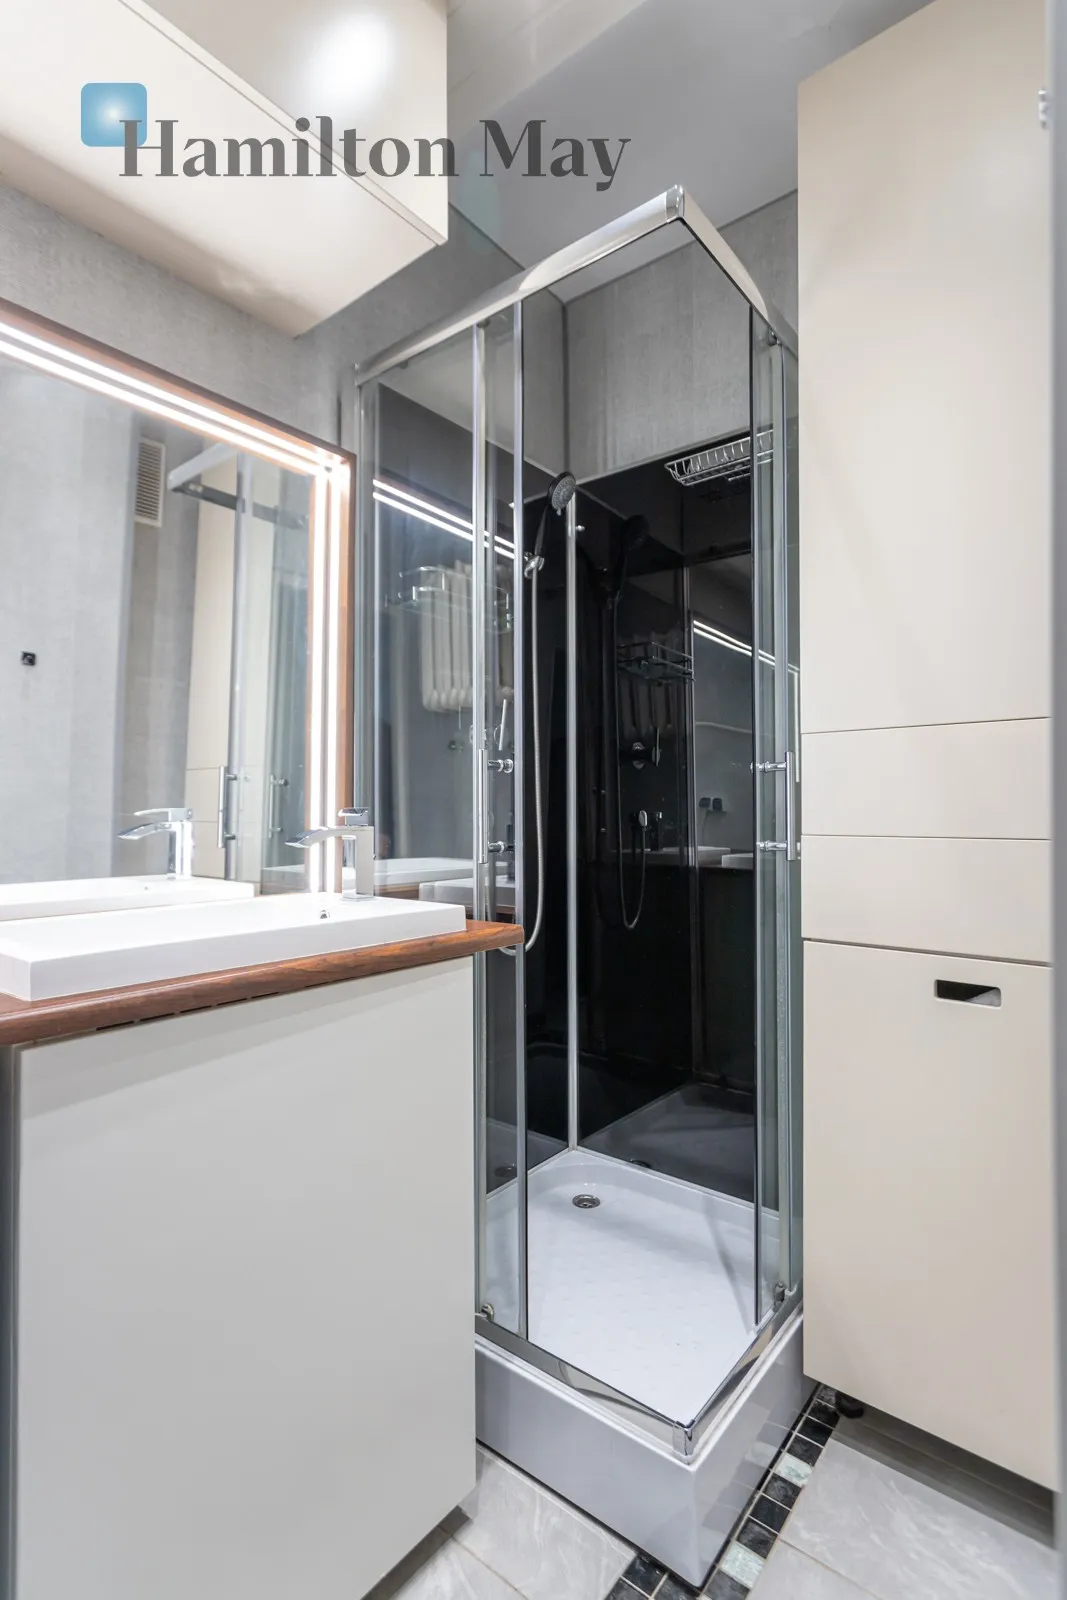 Level: 7 Price: 765000 PLN Bedrooms: 2 Bathrooms: 1 Size: 63m2 Price/m2: 12143 PLN - slider